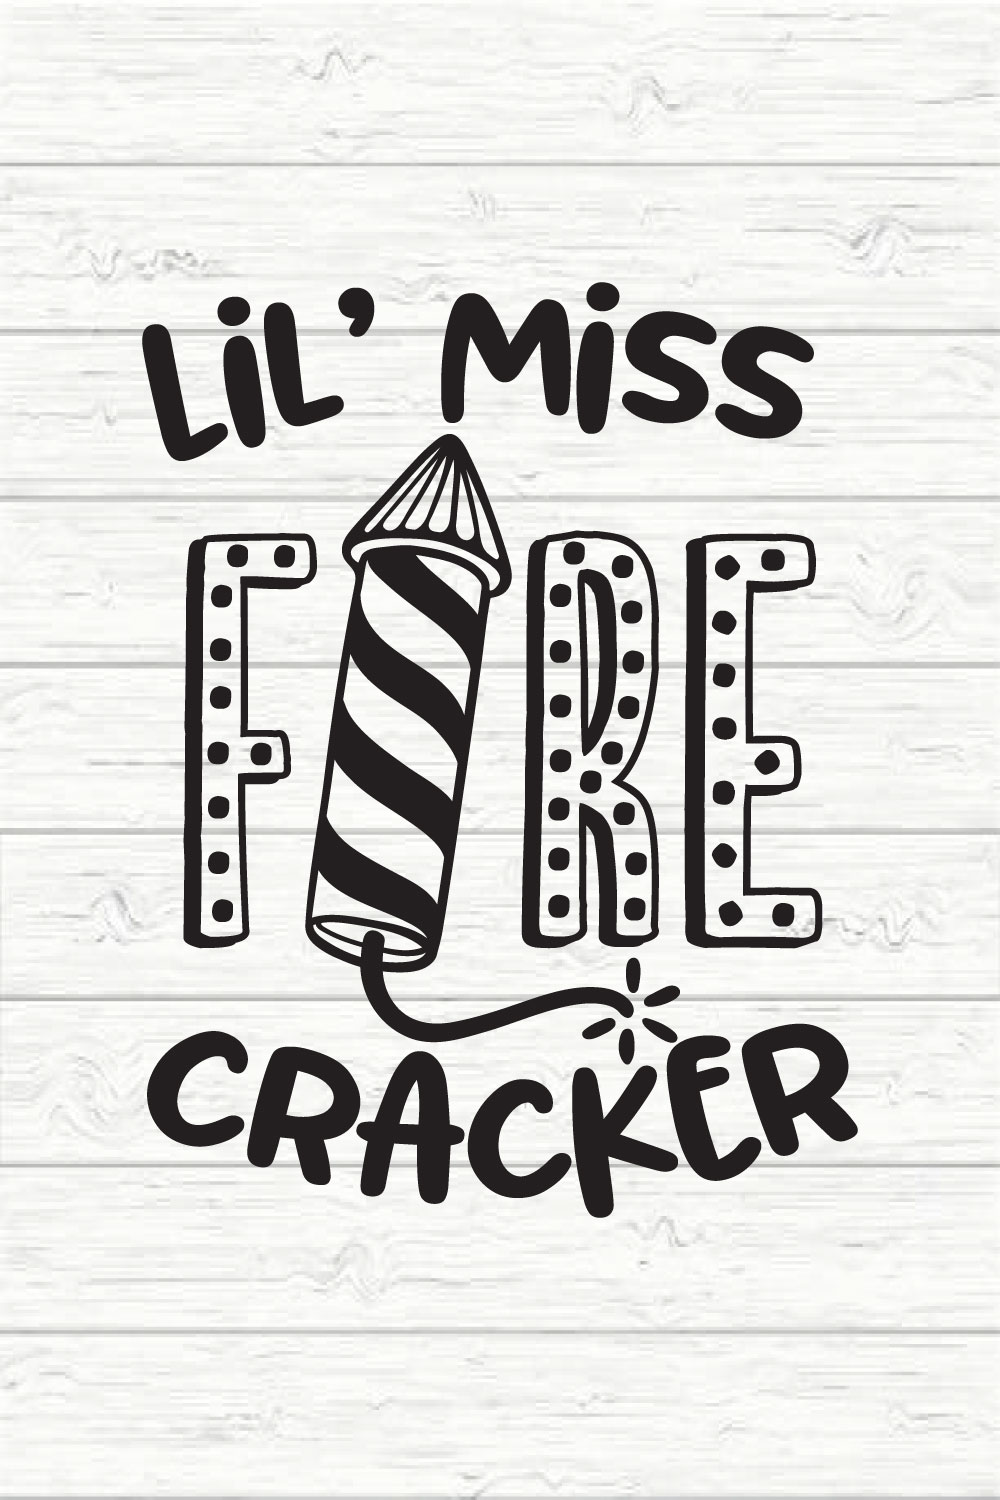 Lil Miss Fire cracker pinterest preview image.